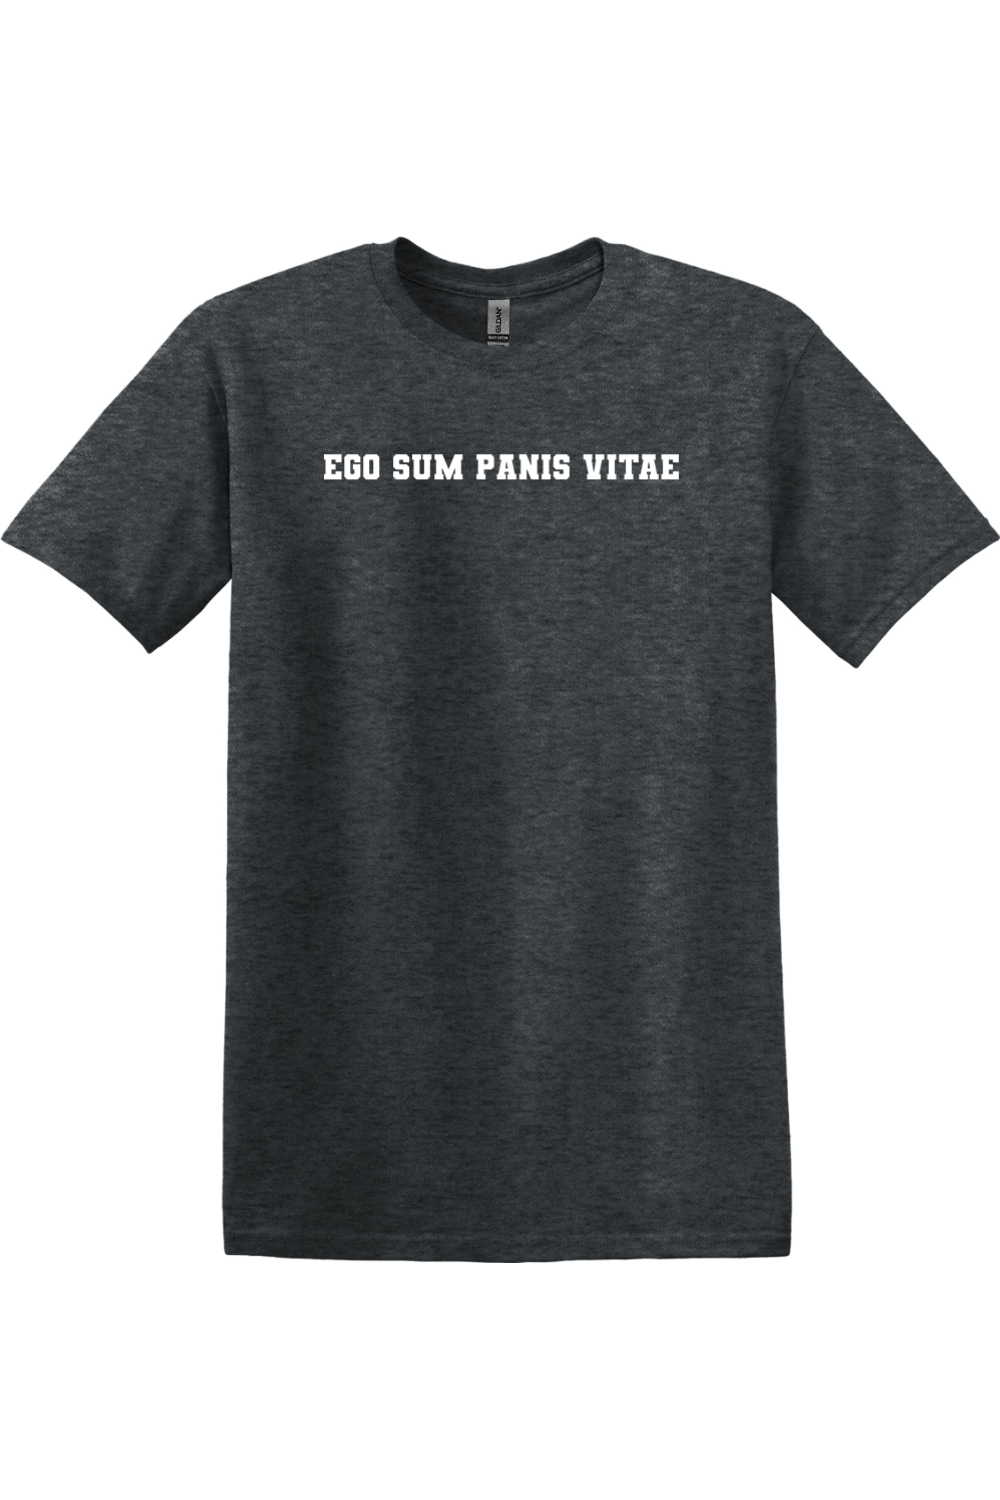 Ego Sum Panis Vitae T-shirt - block text